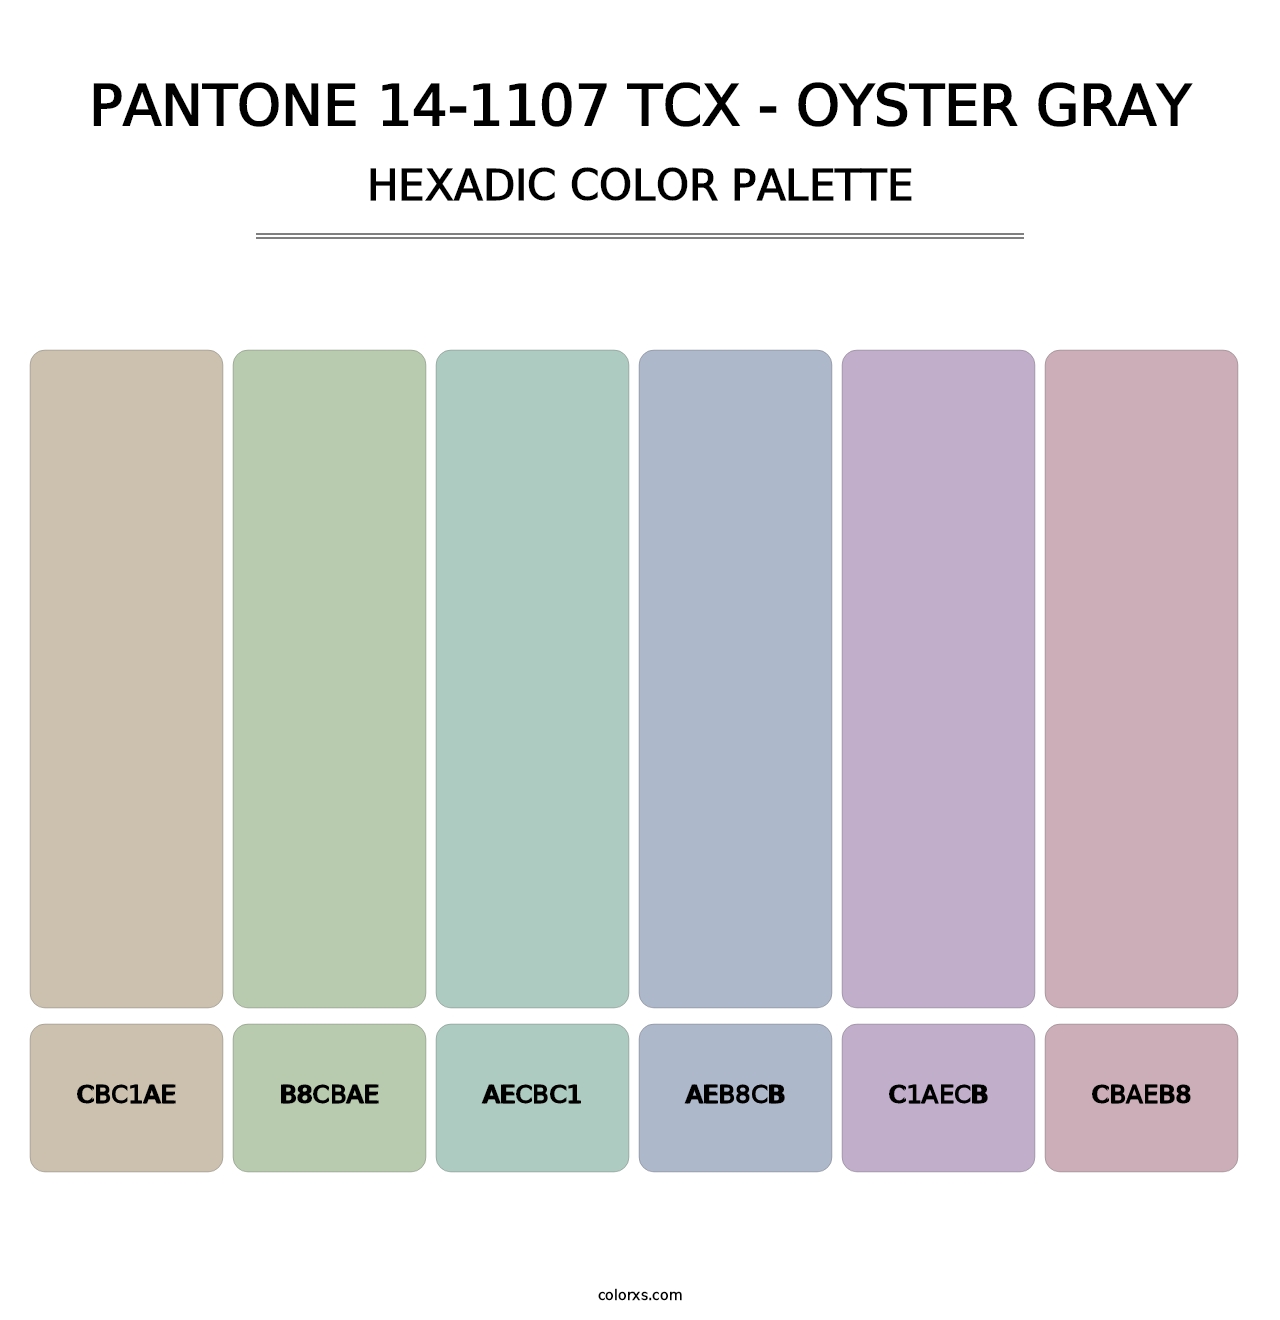 PANTONE 14-1107 TCX - Oyster Gray - Hexadic Color Palette